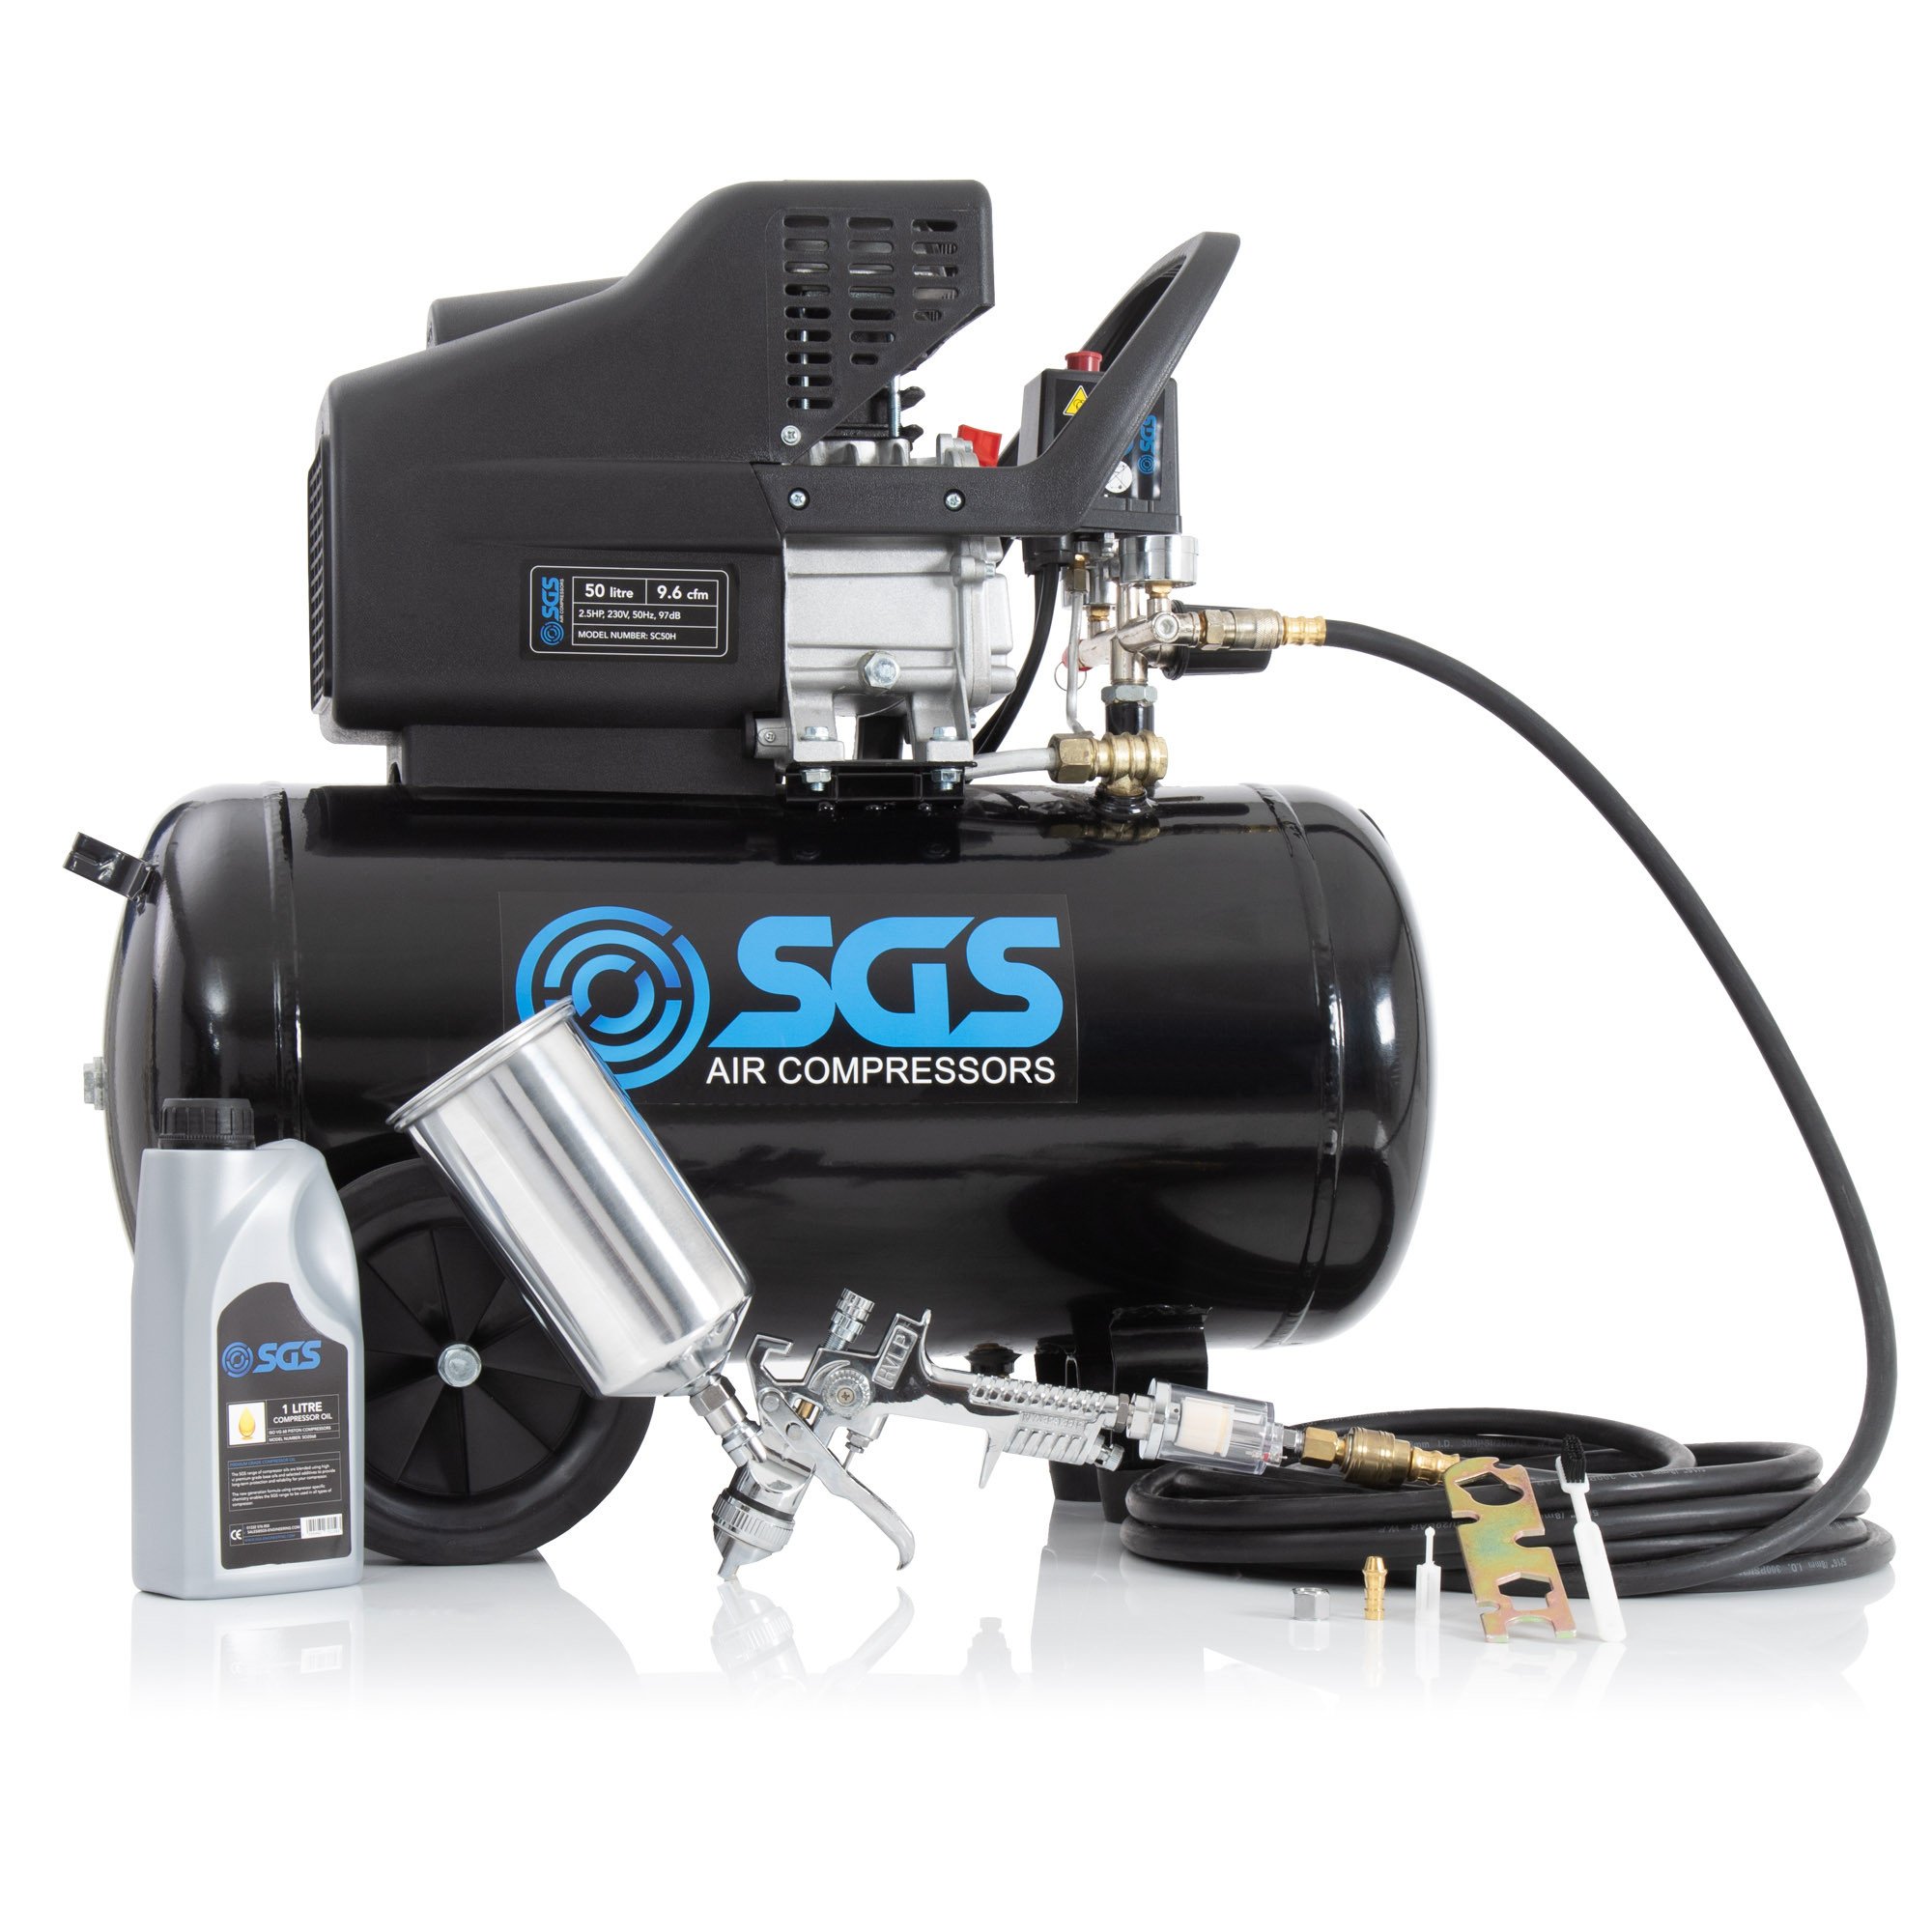 SGS 50升直接驱动空气压缩机和喷枪套件- 9.6CFM 2.5HP 50L